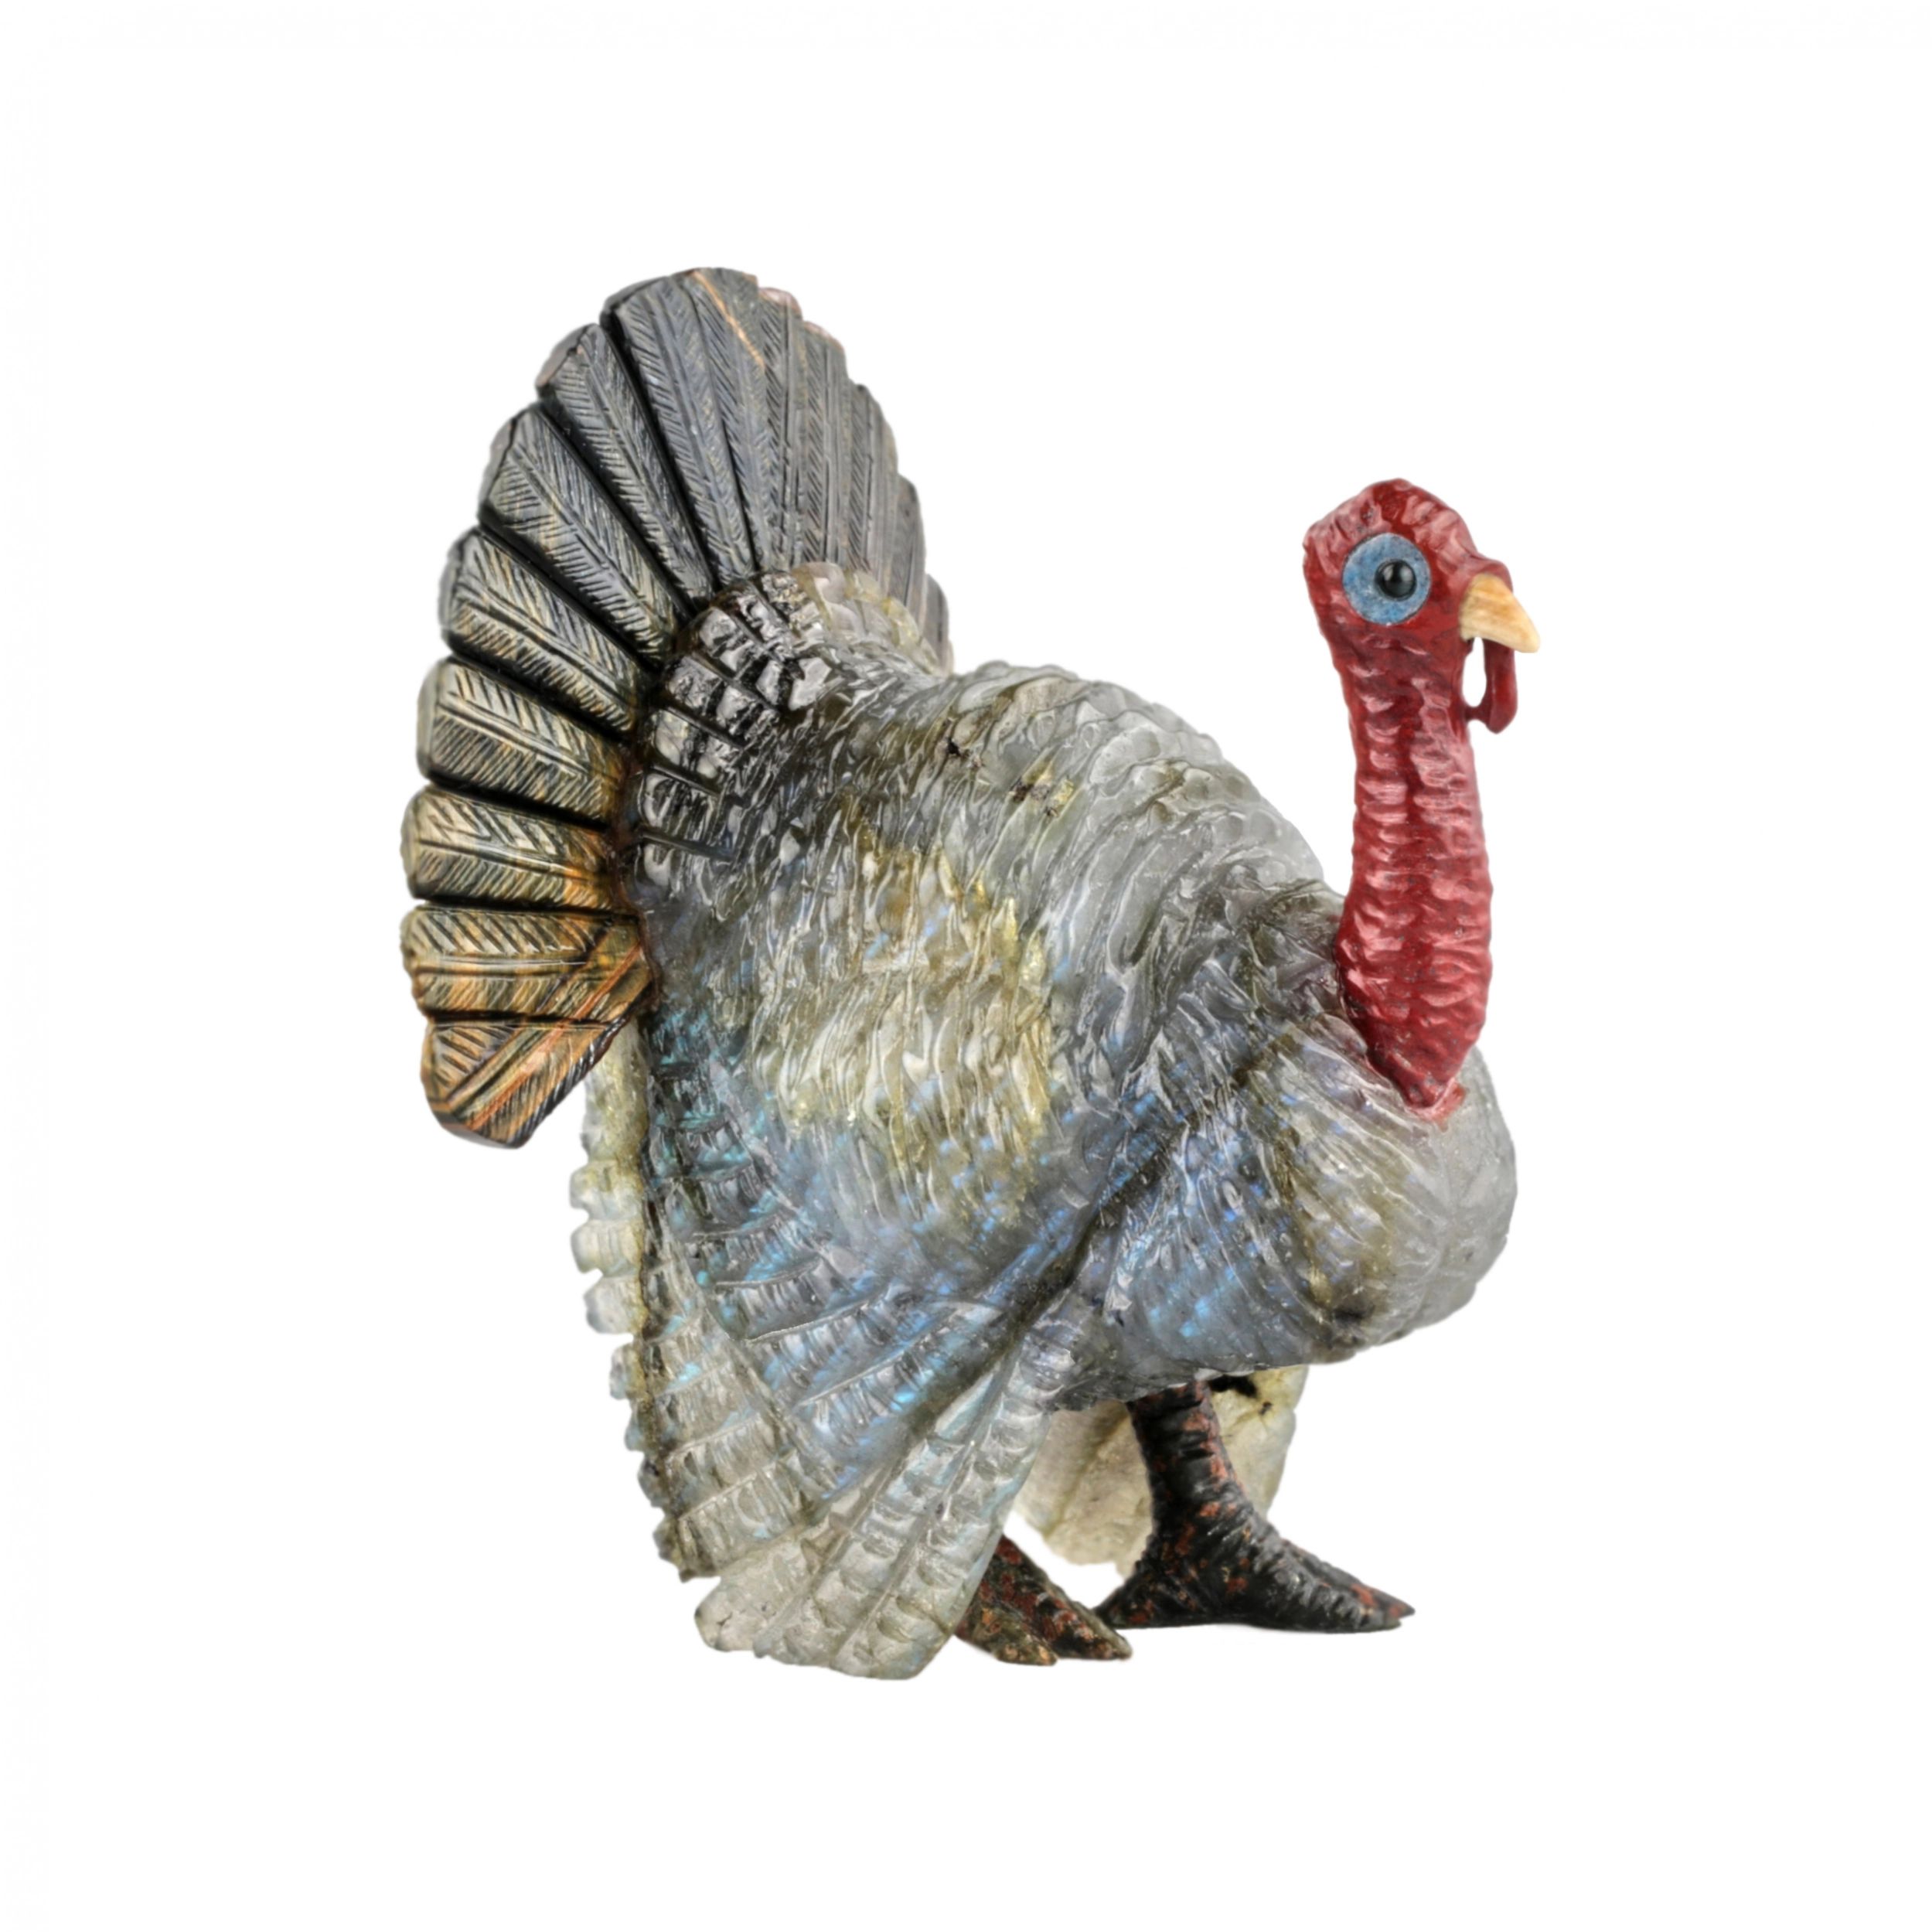 Stone-cut-miniature-Turkey-in-Faberge-style-